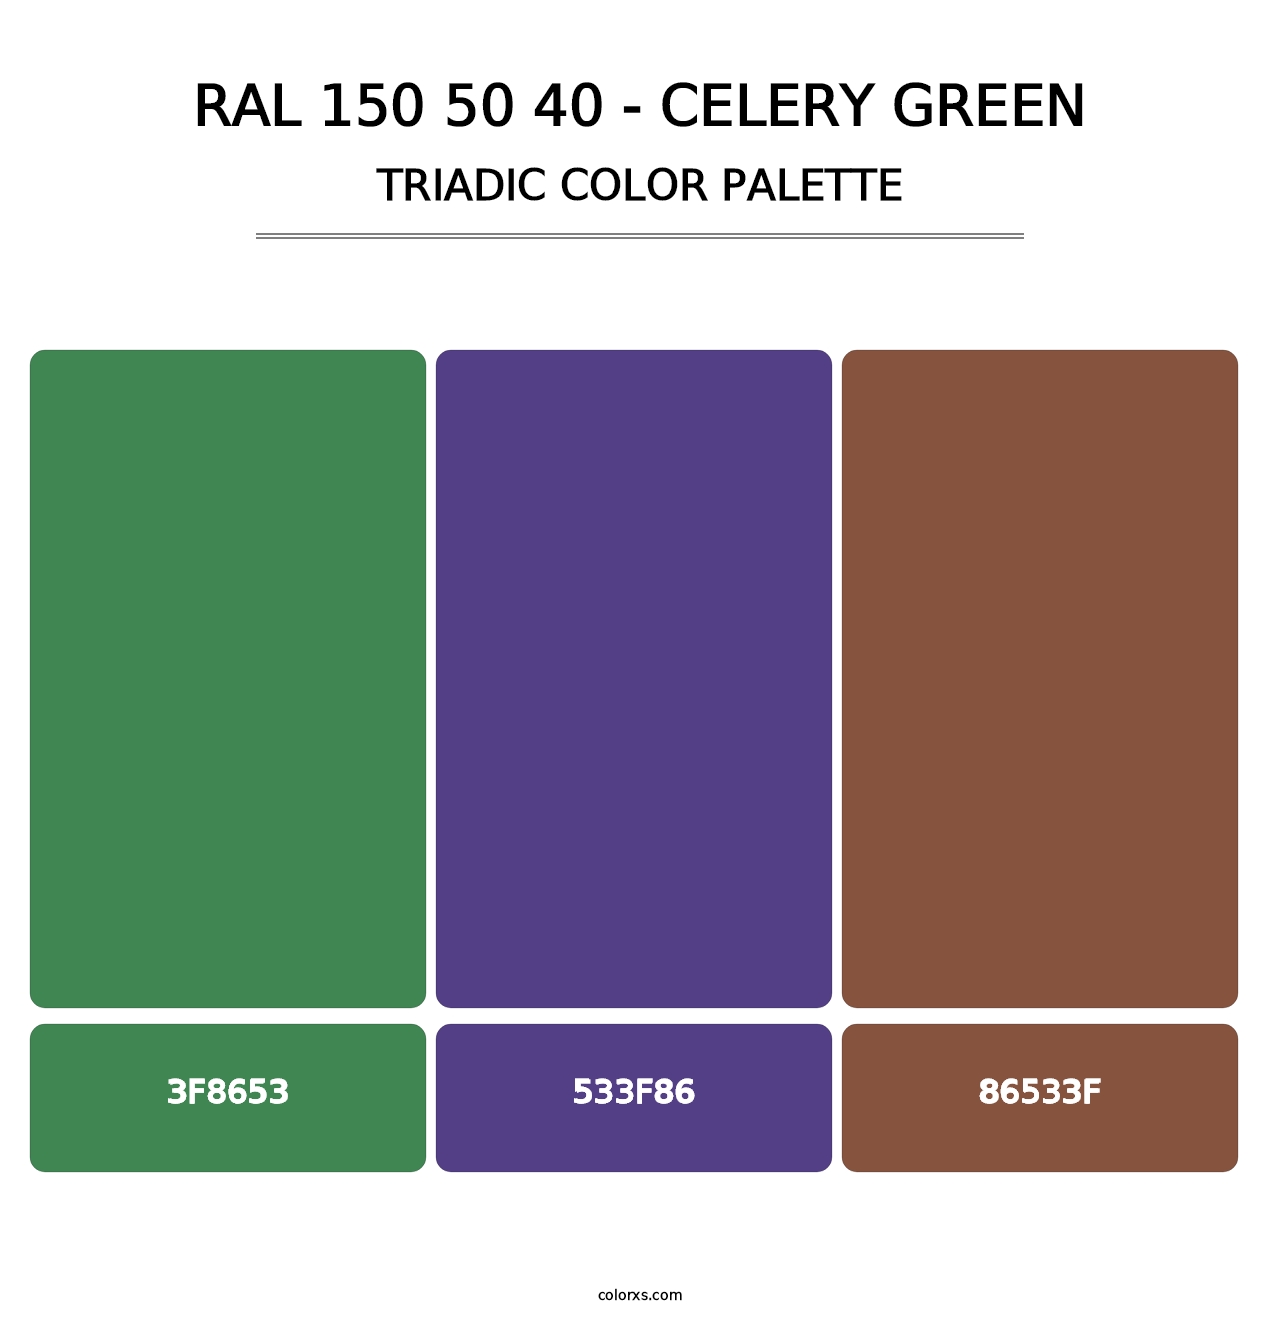 RAL 150 50 40 - Celery Green - Triadic Color Palette